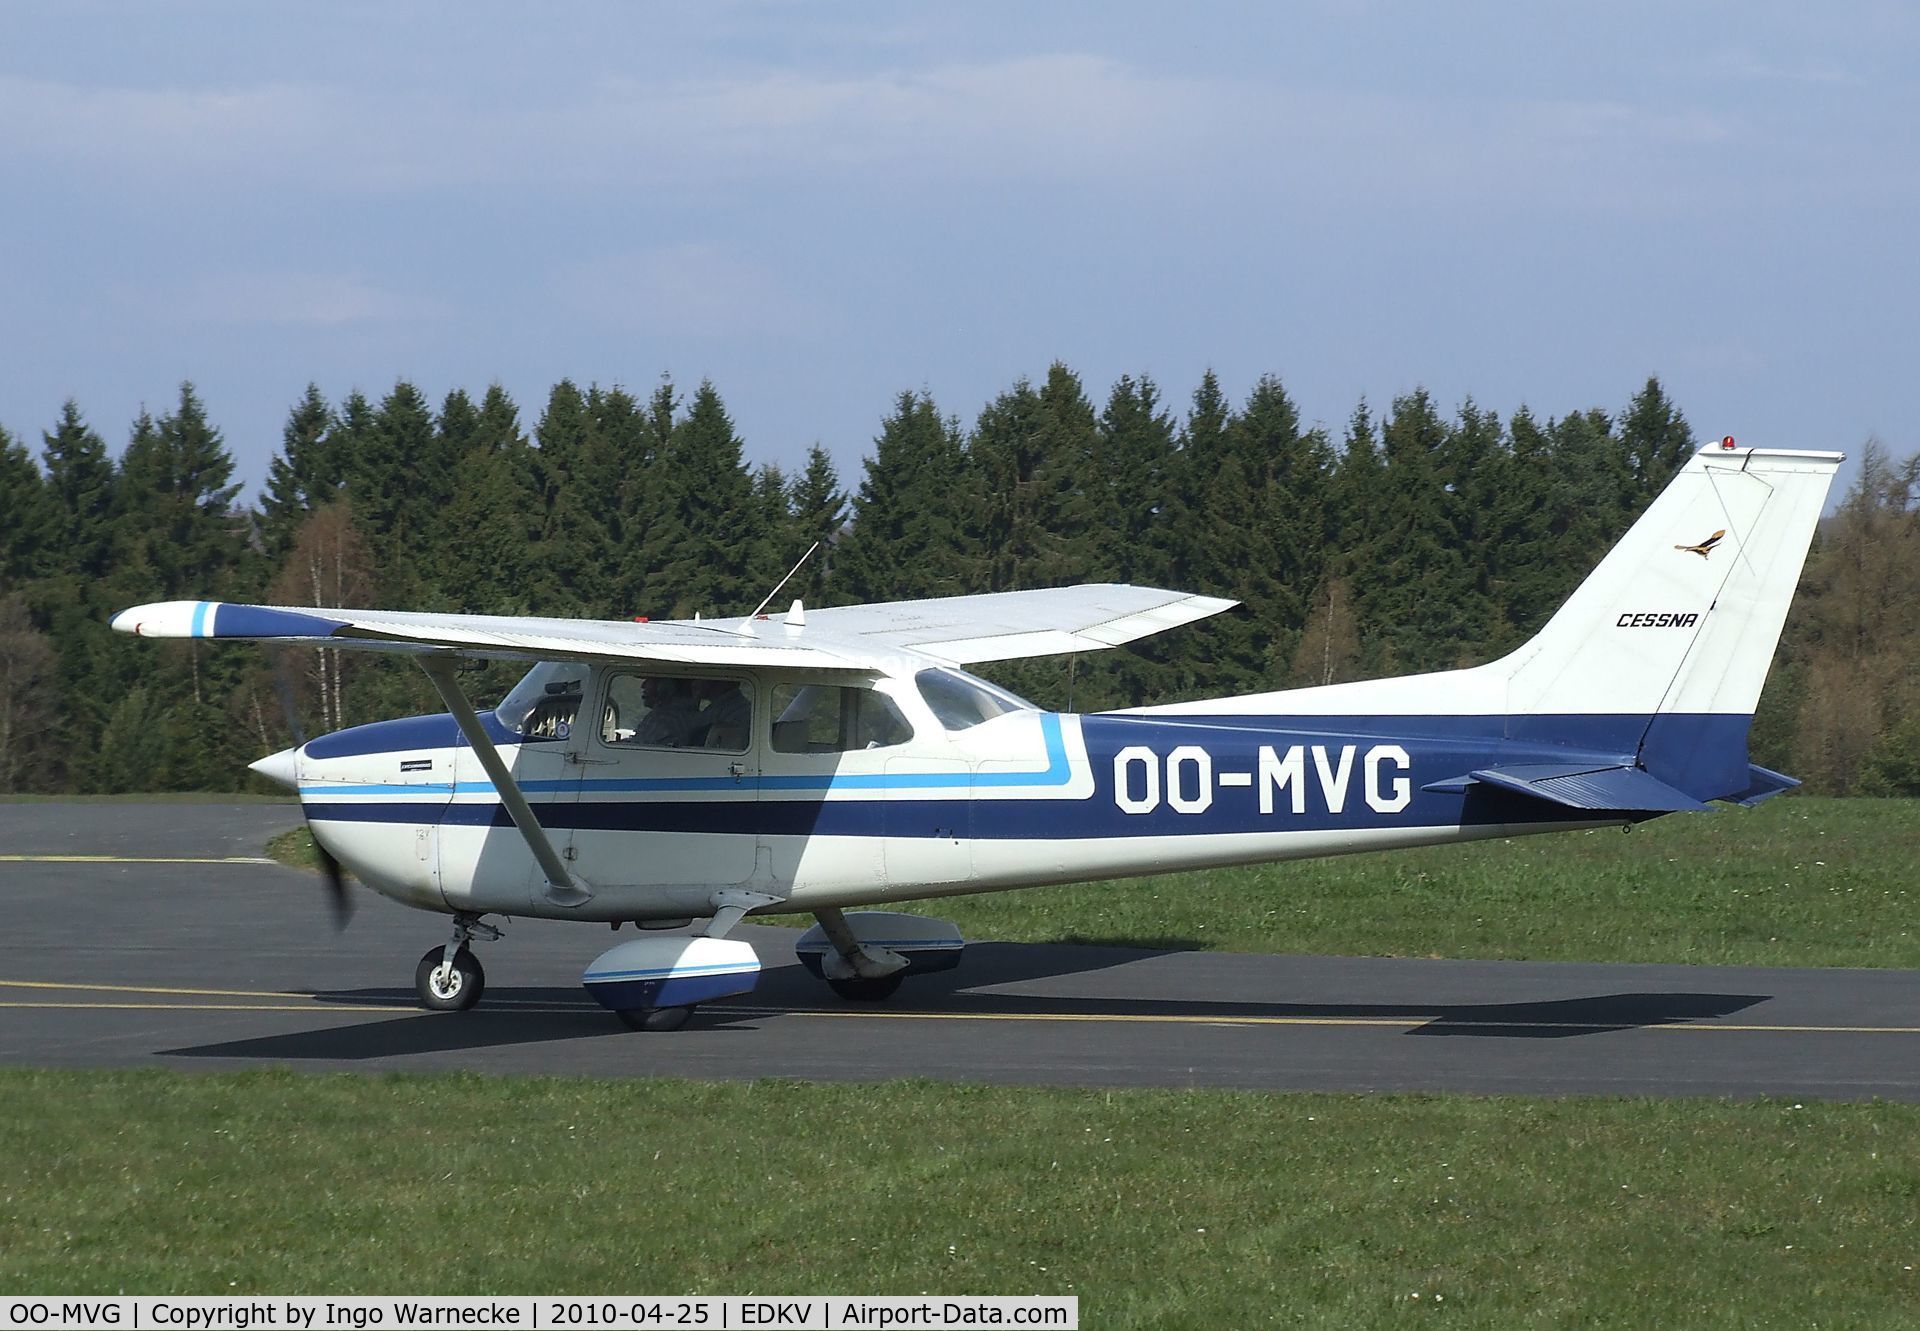 OO-MVG, 1974 Reims F172M Skyhawk Skyhawk C/N 1130, Cessna (Reims) F172M Skyhawk at Dahlemer Binz airfield